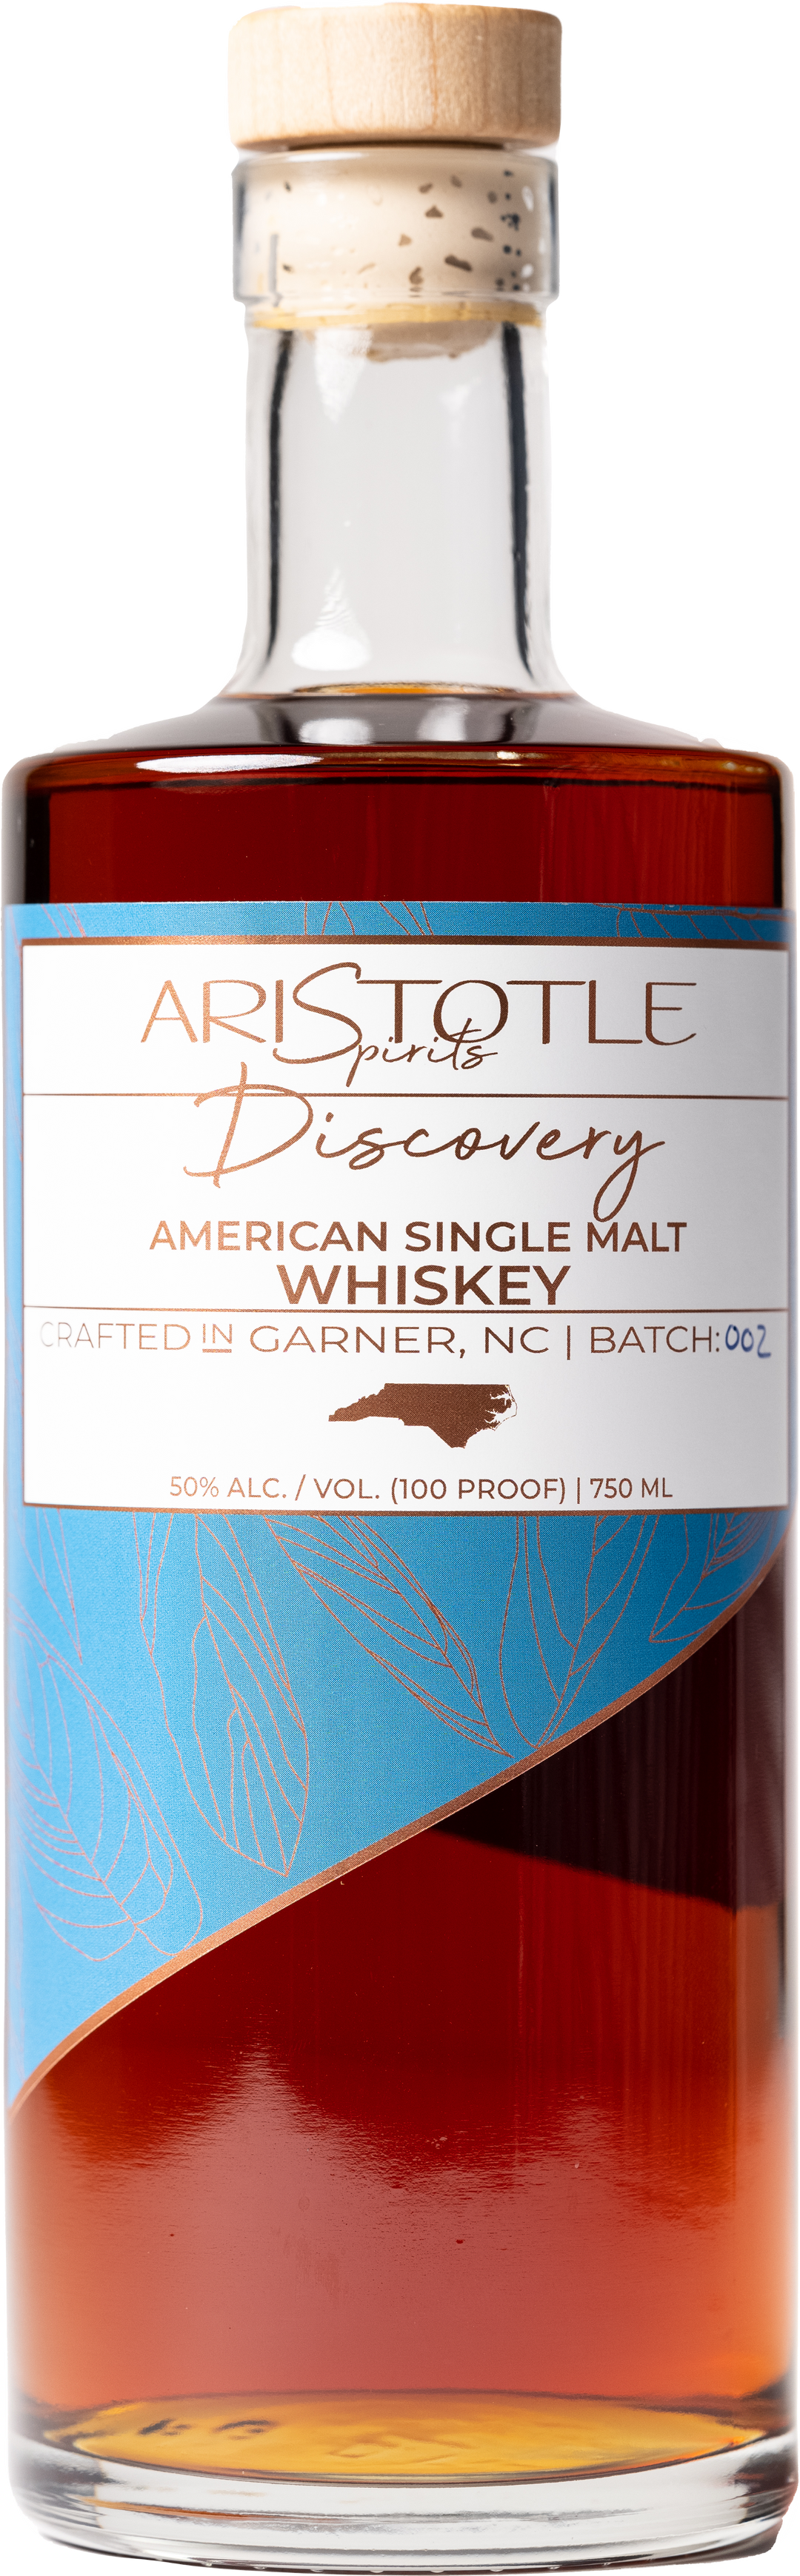 Aristotle Spirits Discovery American Single Malt